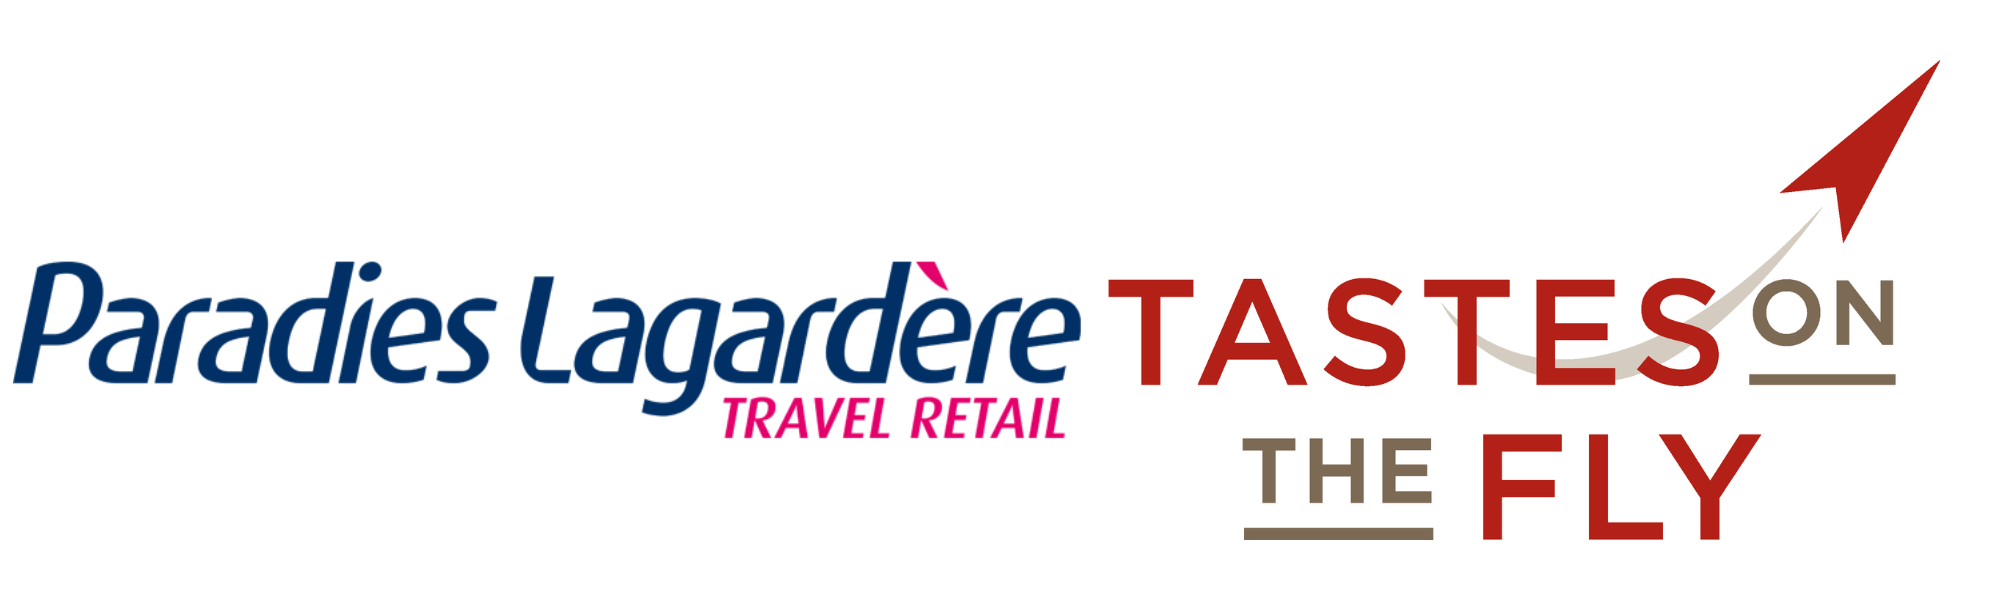 Paradies Lagardère opens two retail concepts at JFK